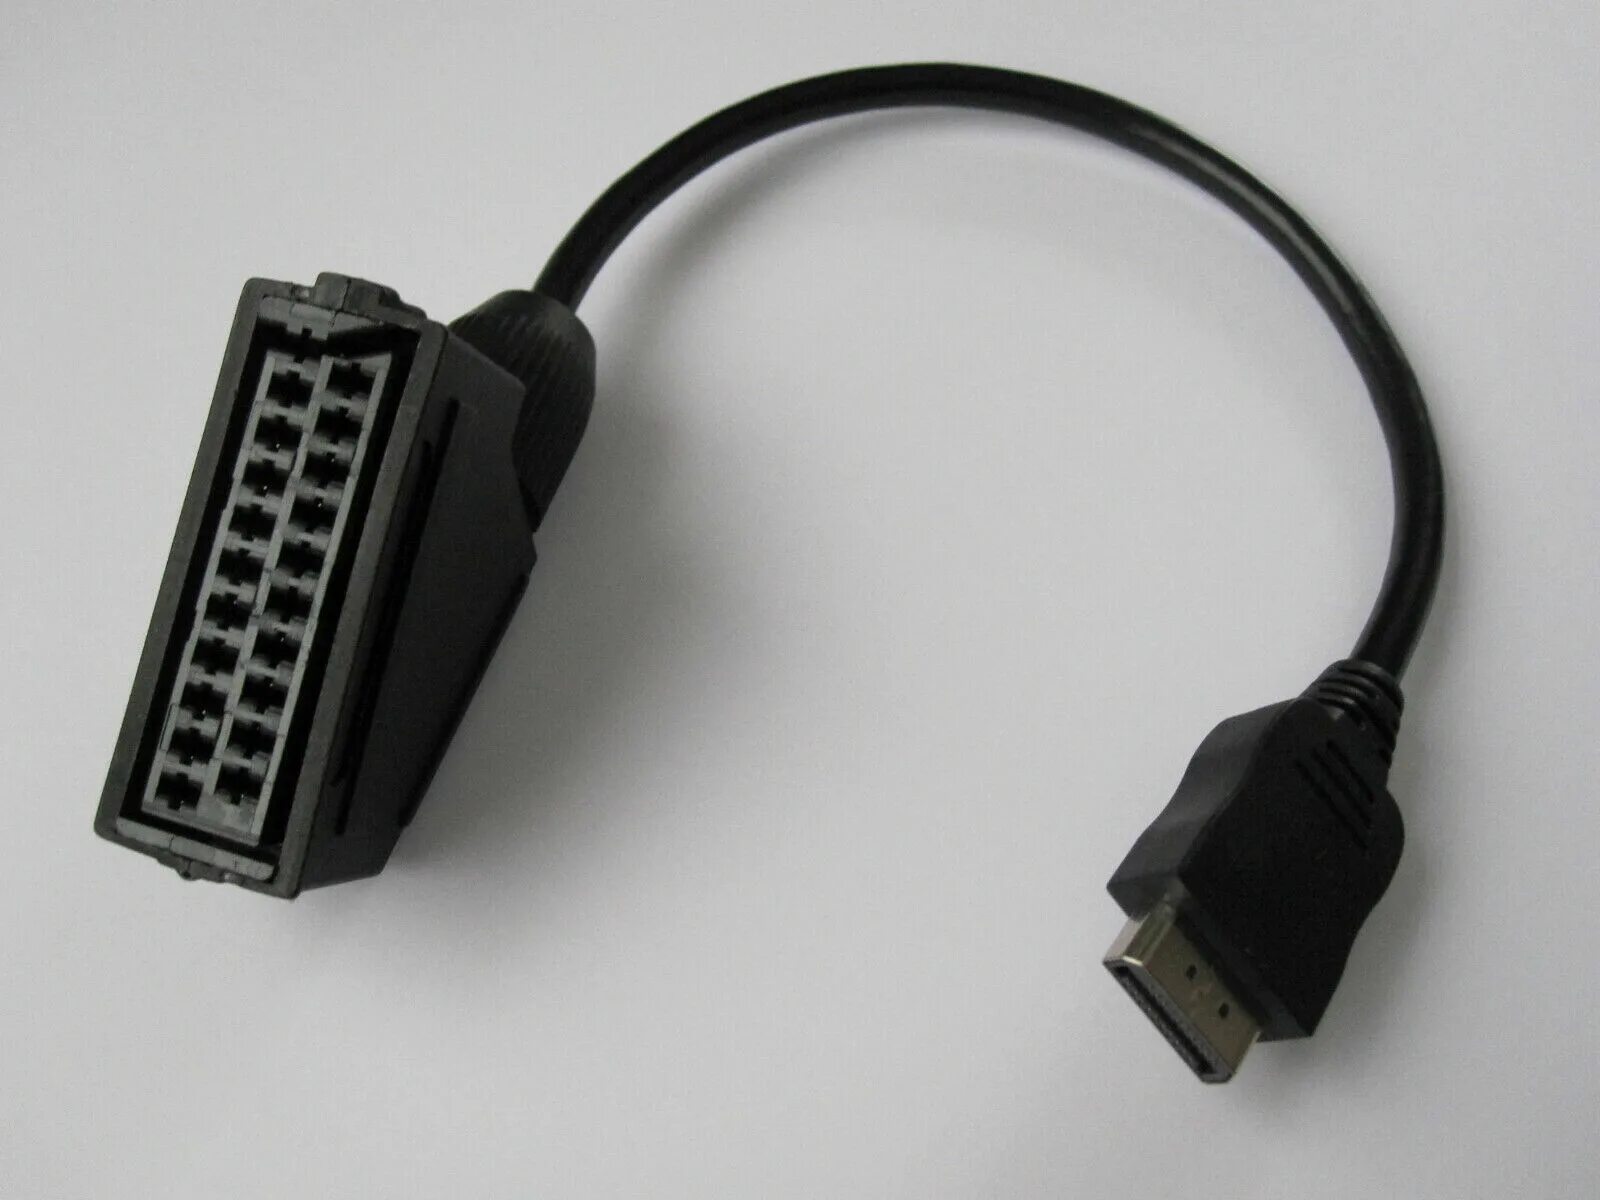 Адаптер av1 (SCART). Переходник HDMI SCART. Системный кабель Panasonic k1ha25ha0001. Xbox переходник SCART. Скарт переходник для телевизора